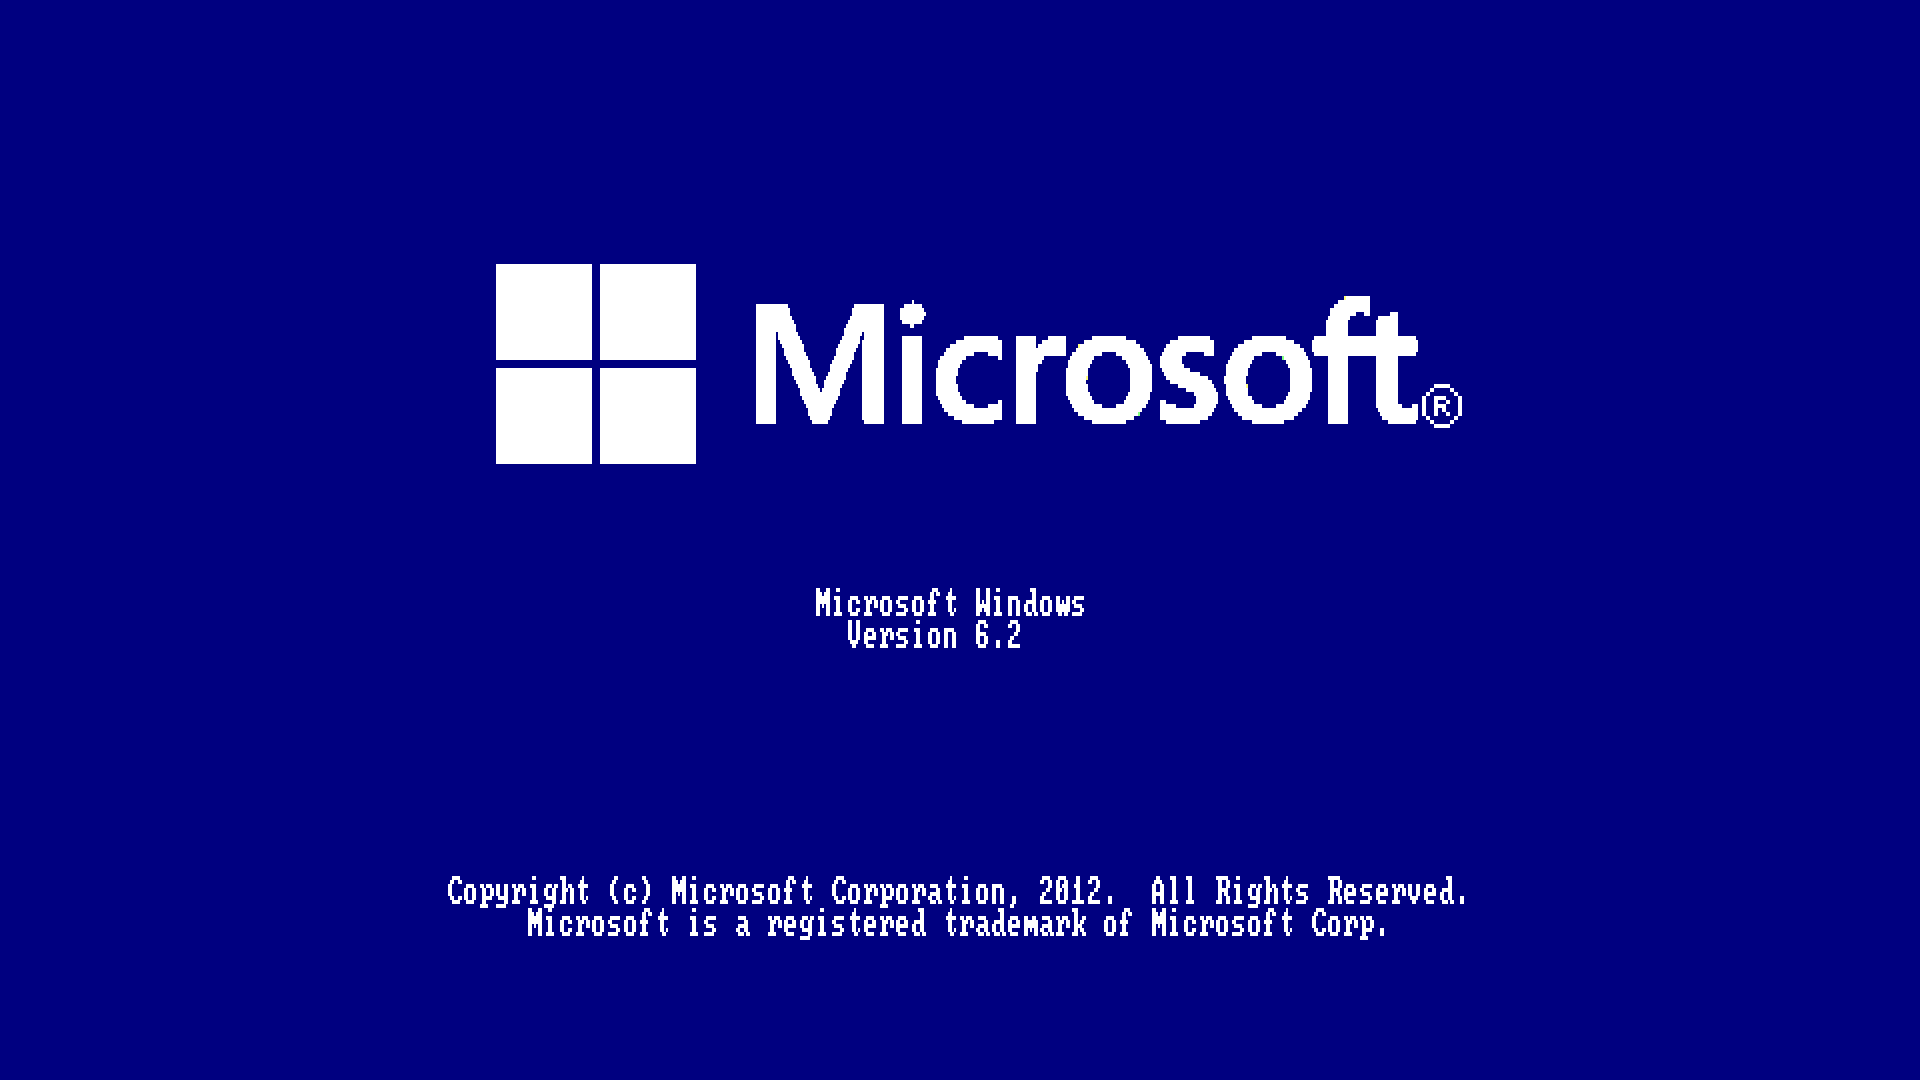 Microsoft Windows 6.2 wallpaper, released in 2012 - Windows 95